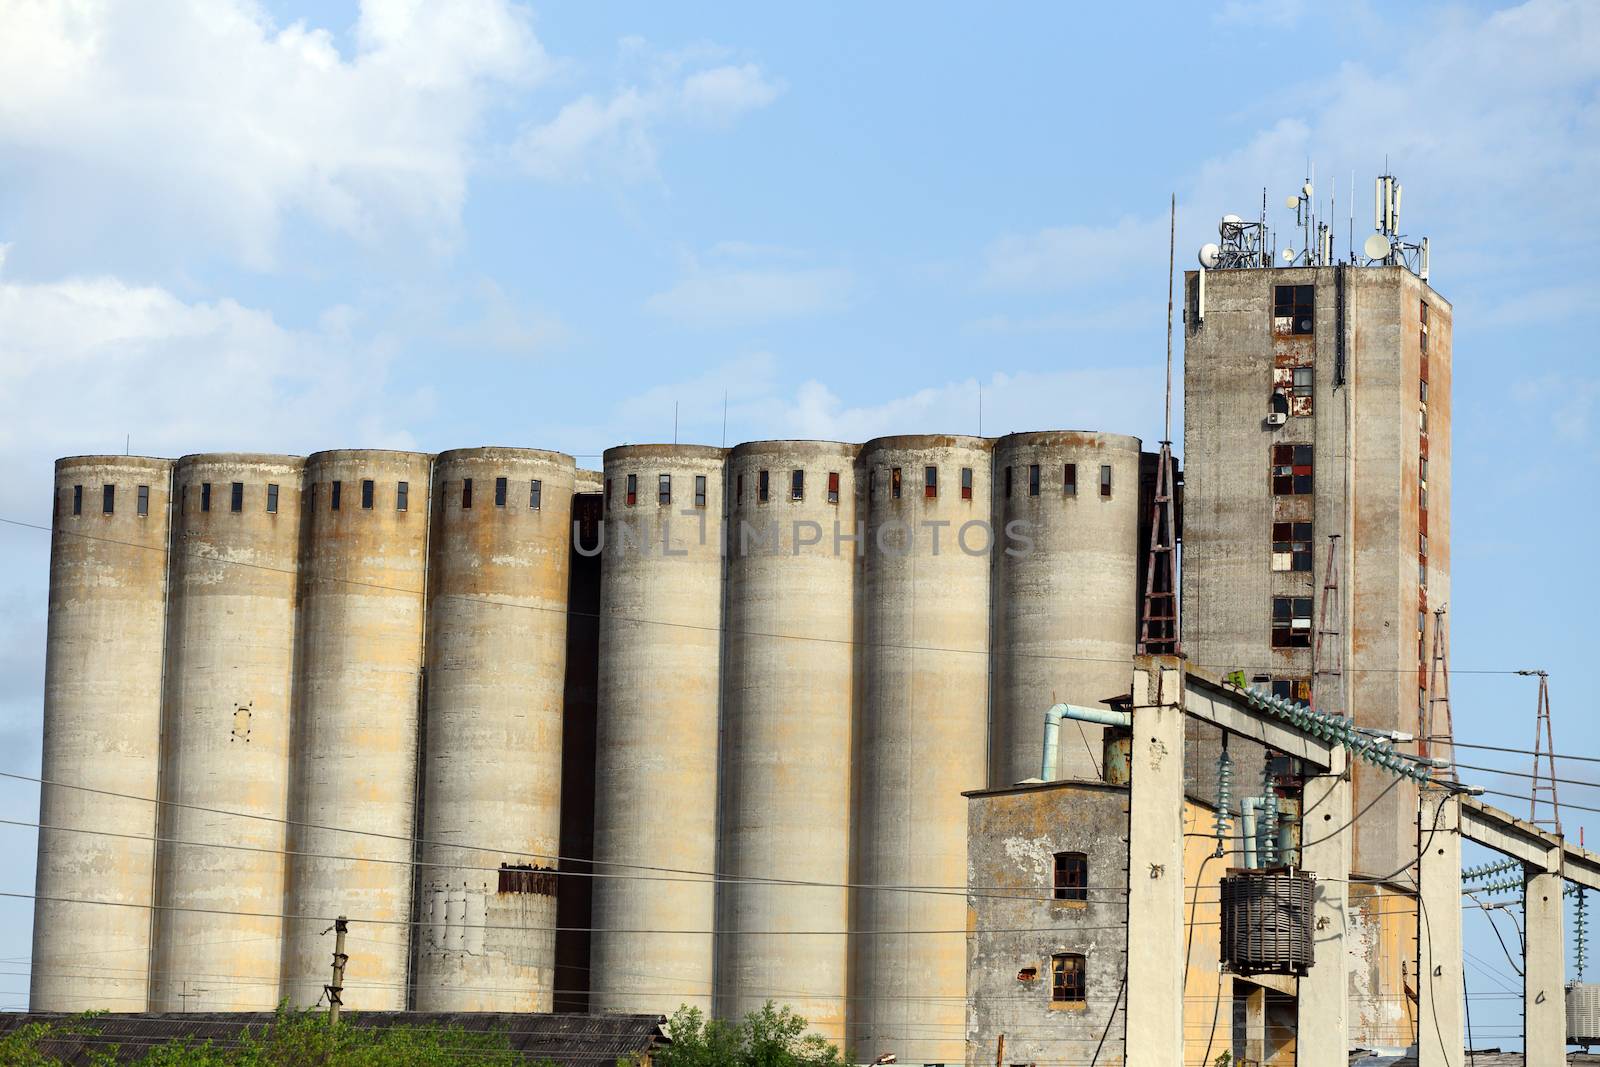 old concrete silos by alexkosev